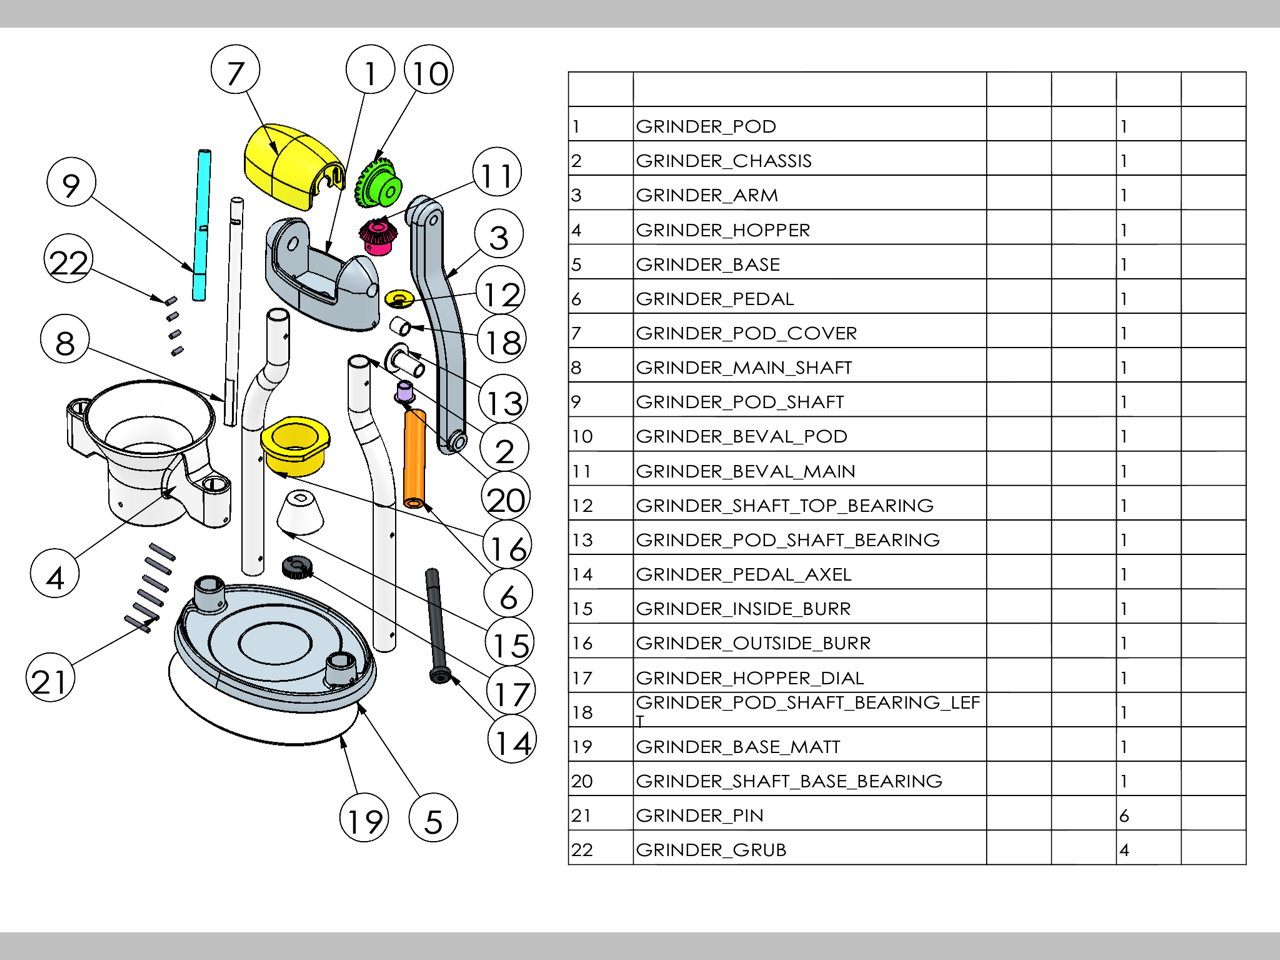 ROK GRINDER Parts Diagram.png.